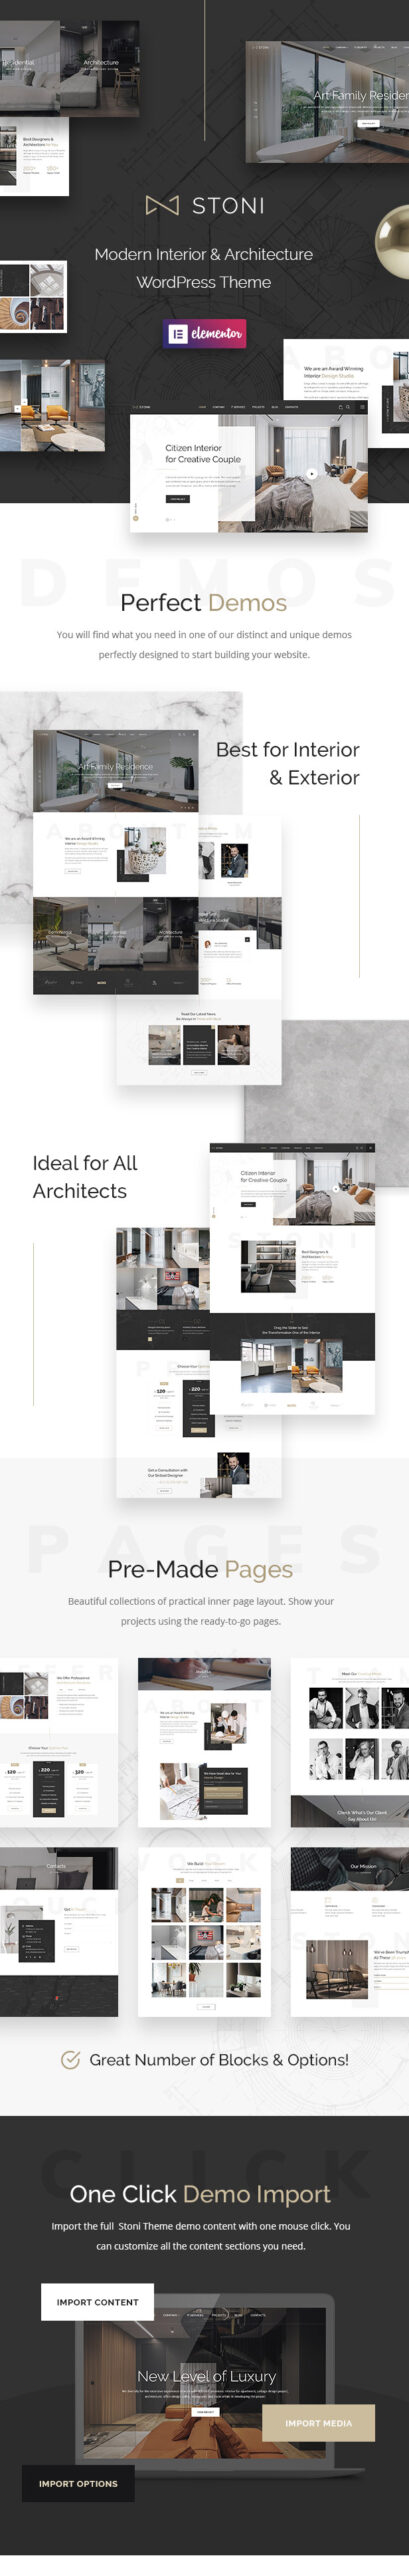 Stoni - Architecture Agency WordPress Theme 1